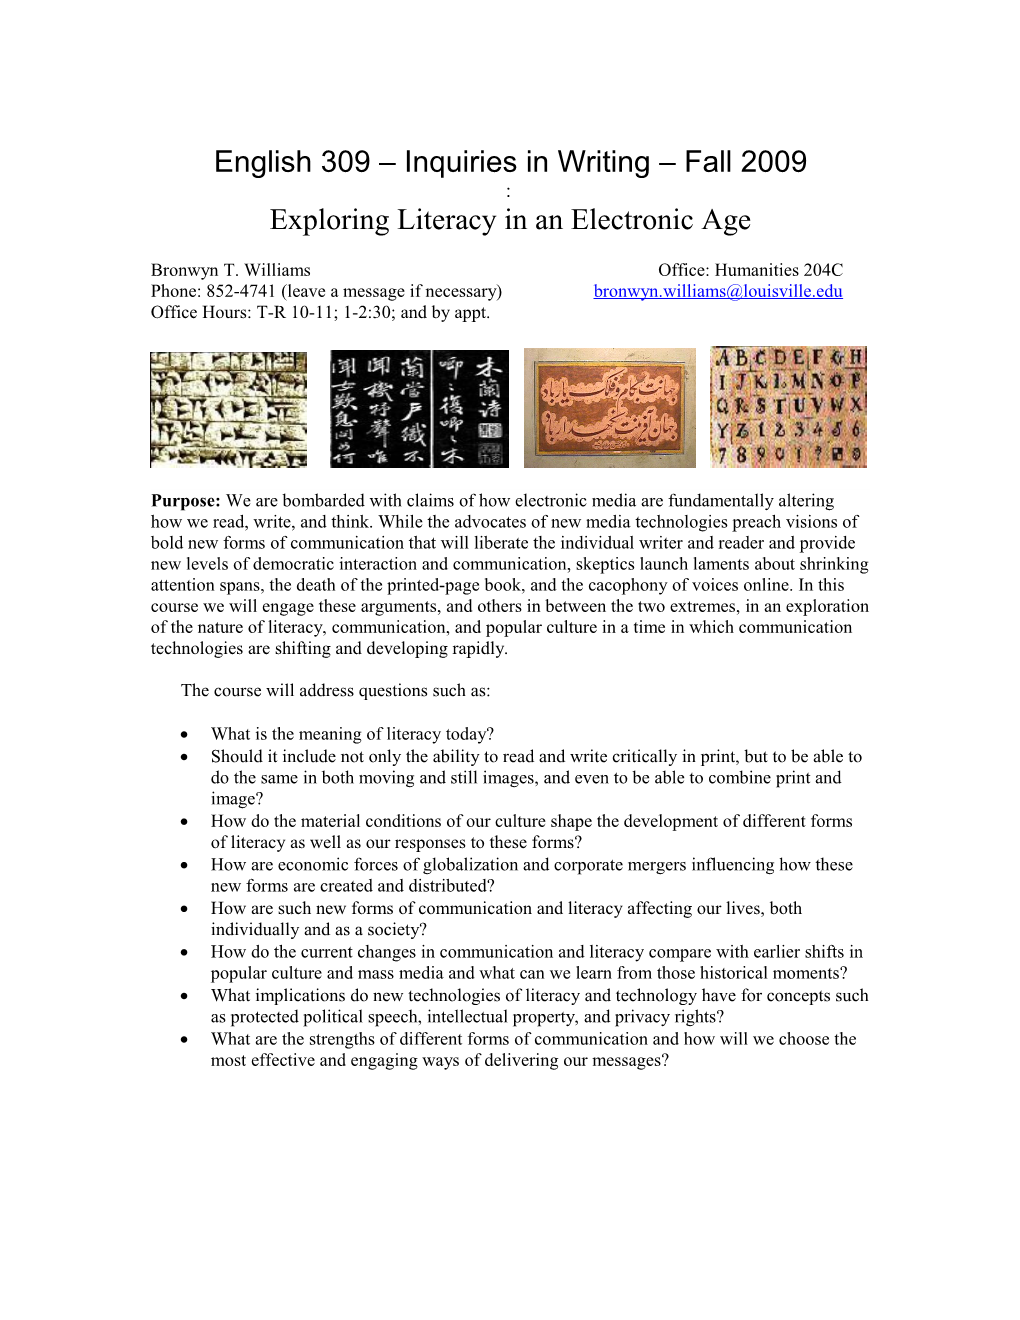 English 309 Inquiries in Writing Fall 2009